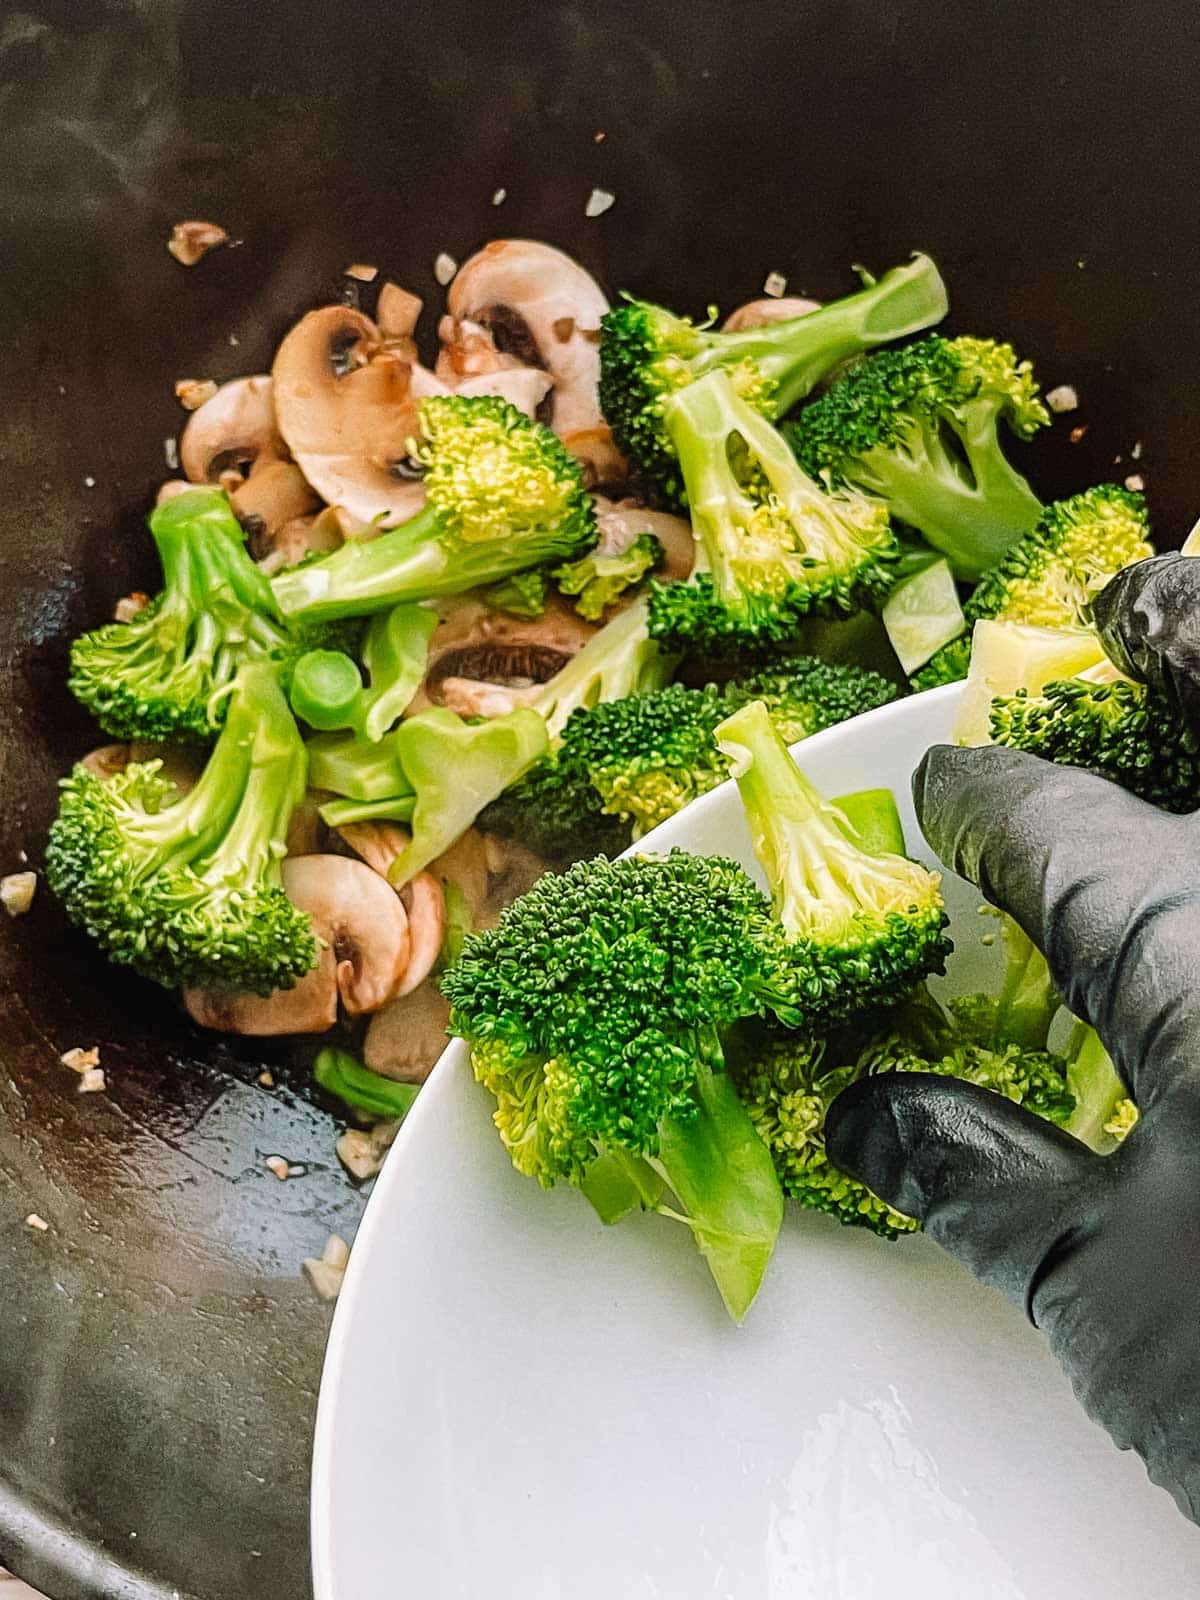 Adding broccoli florets to a wok with stir fried button mushroom slices.